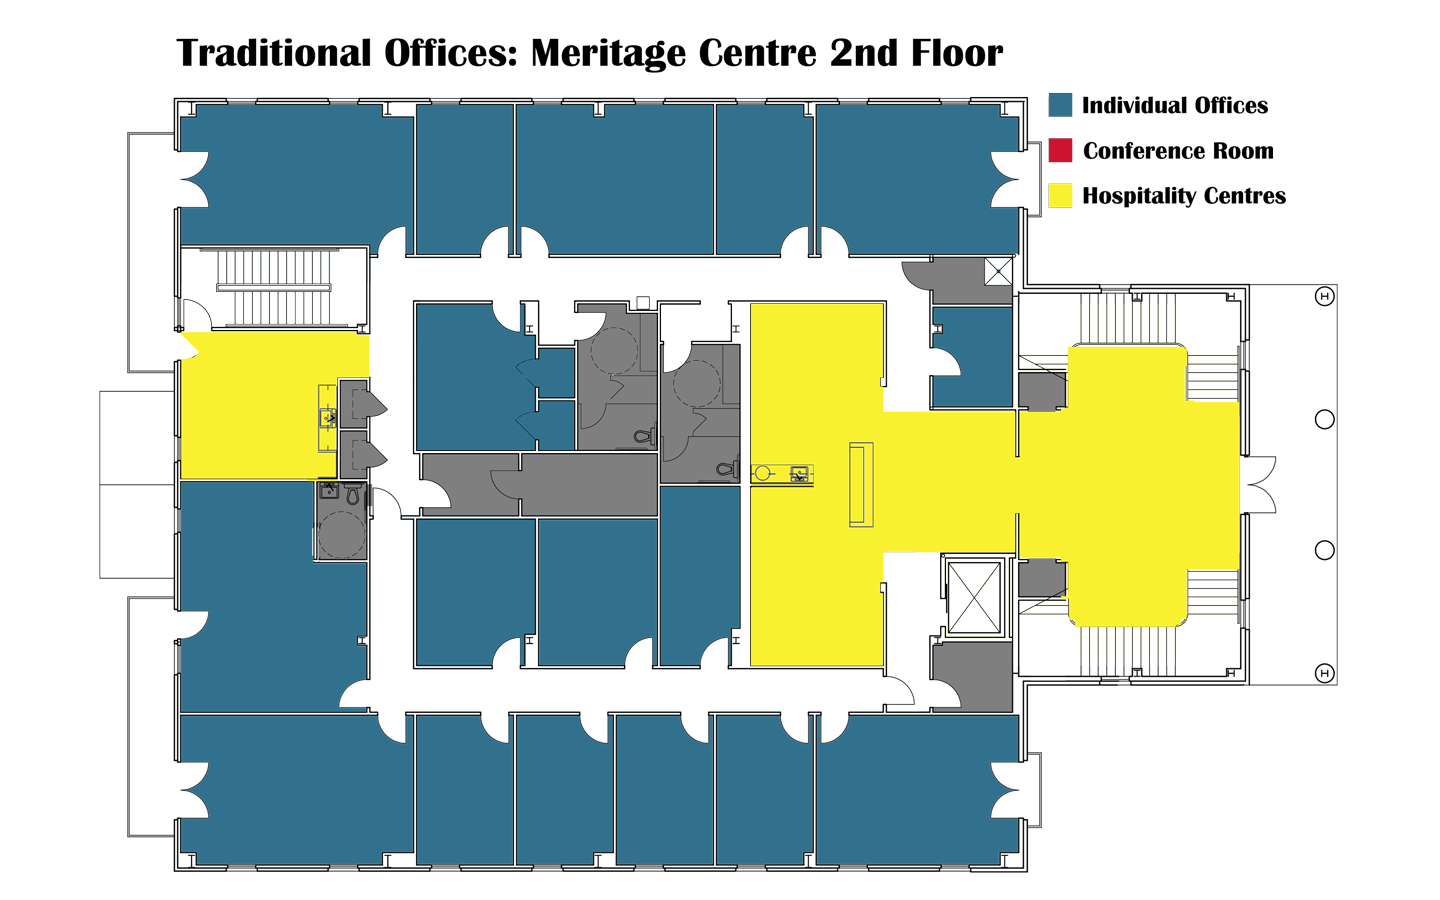 second floor layout plan